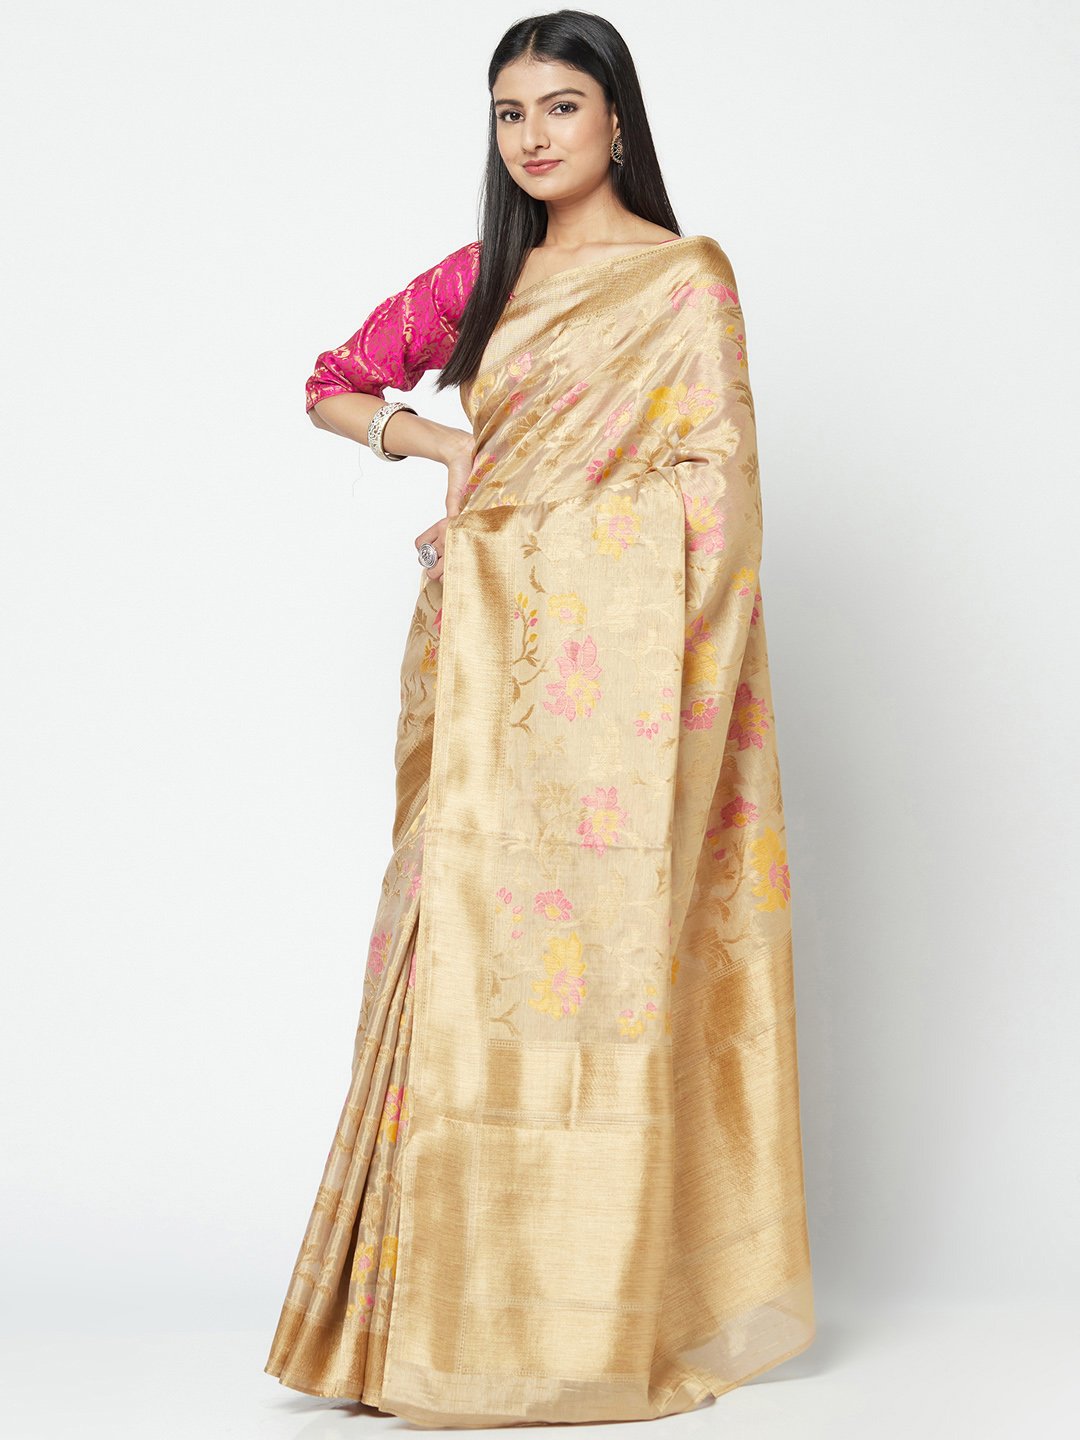 Shop Handloom Saree In Beige Colour With Minakari Work which is Saree online at simaaya At